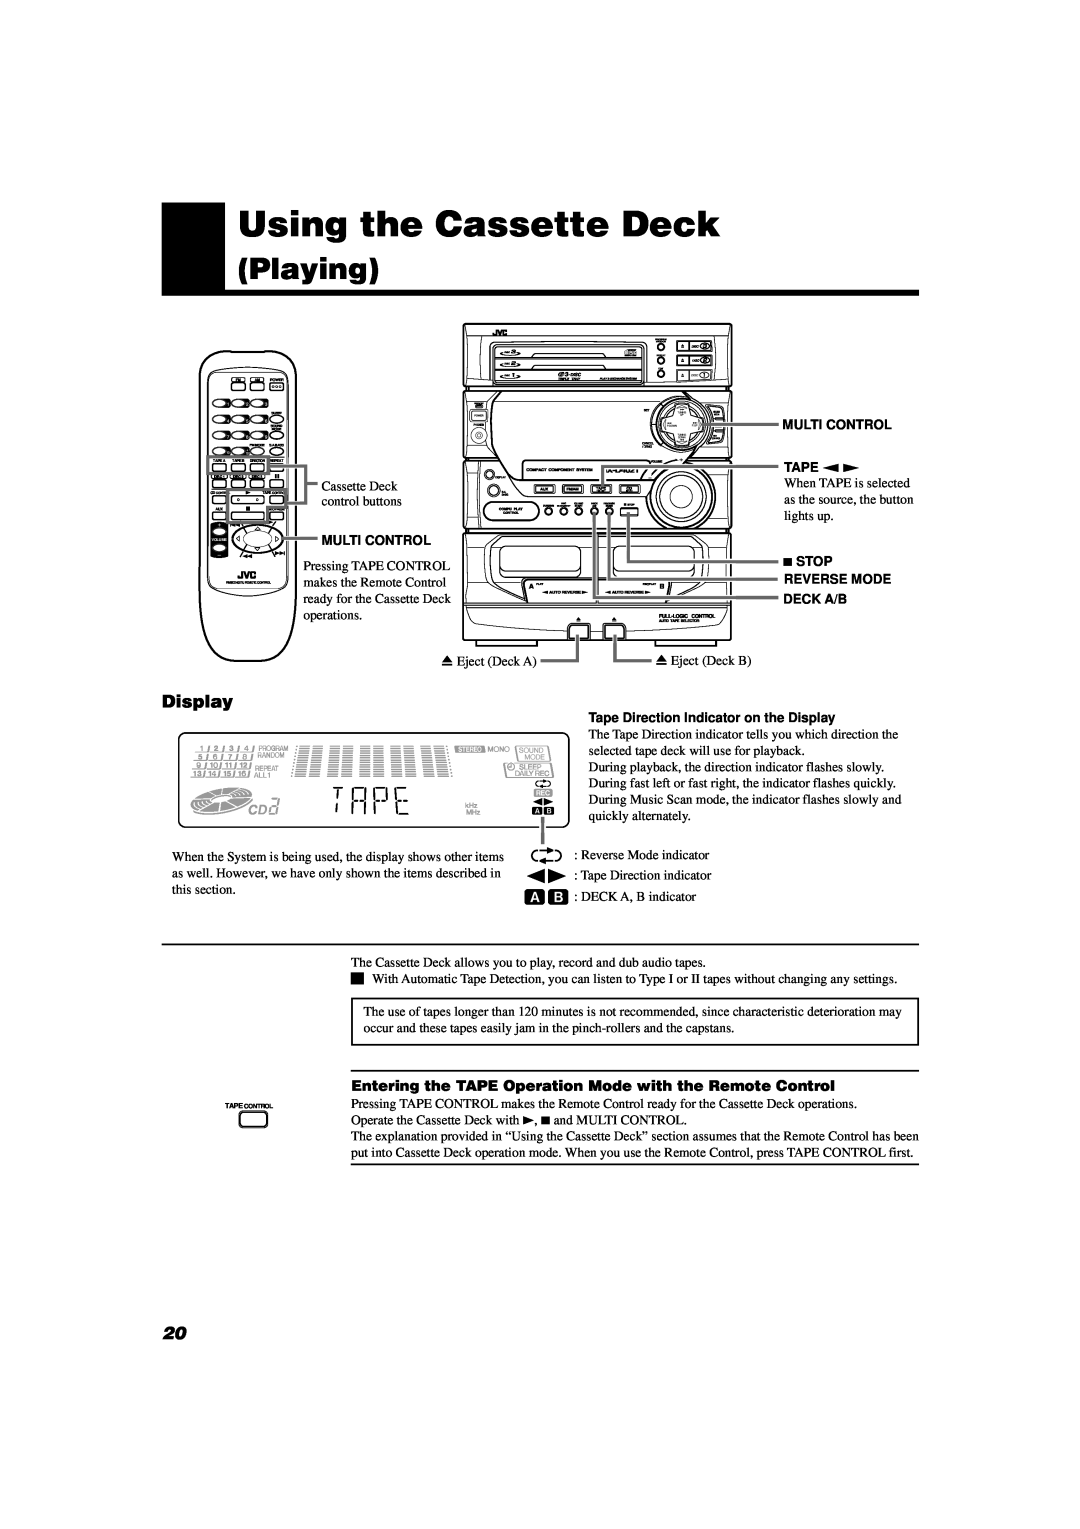 JVC MX-D402T manual Using the Cassette Deck, Playing, Multi Control Tape ª £, Stop Reverse Mode Deck A/B 